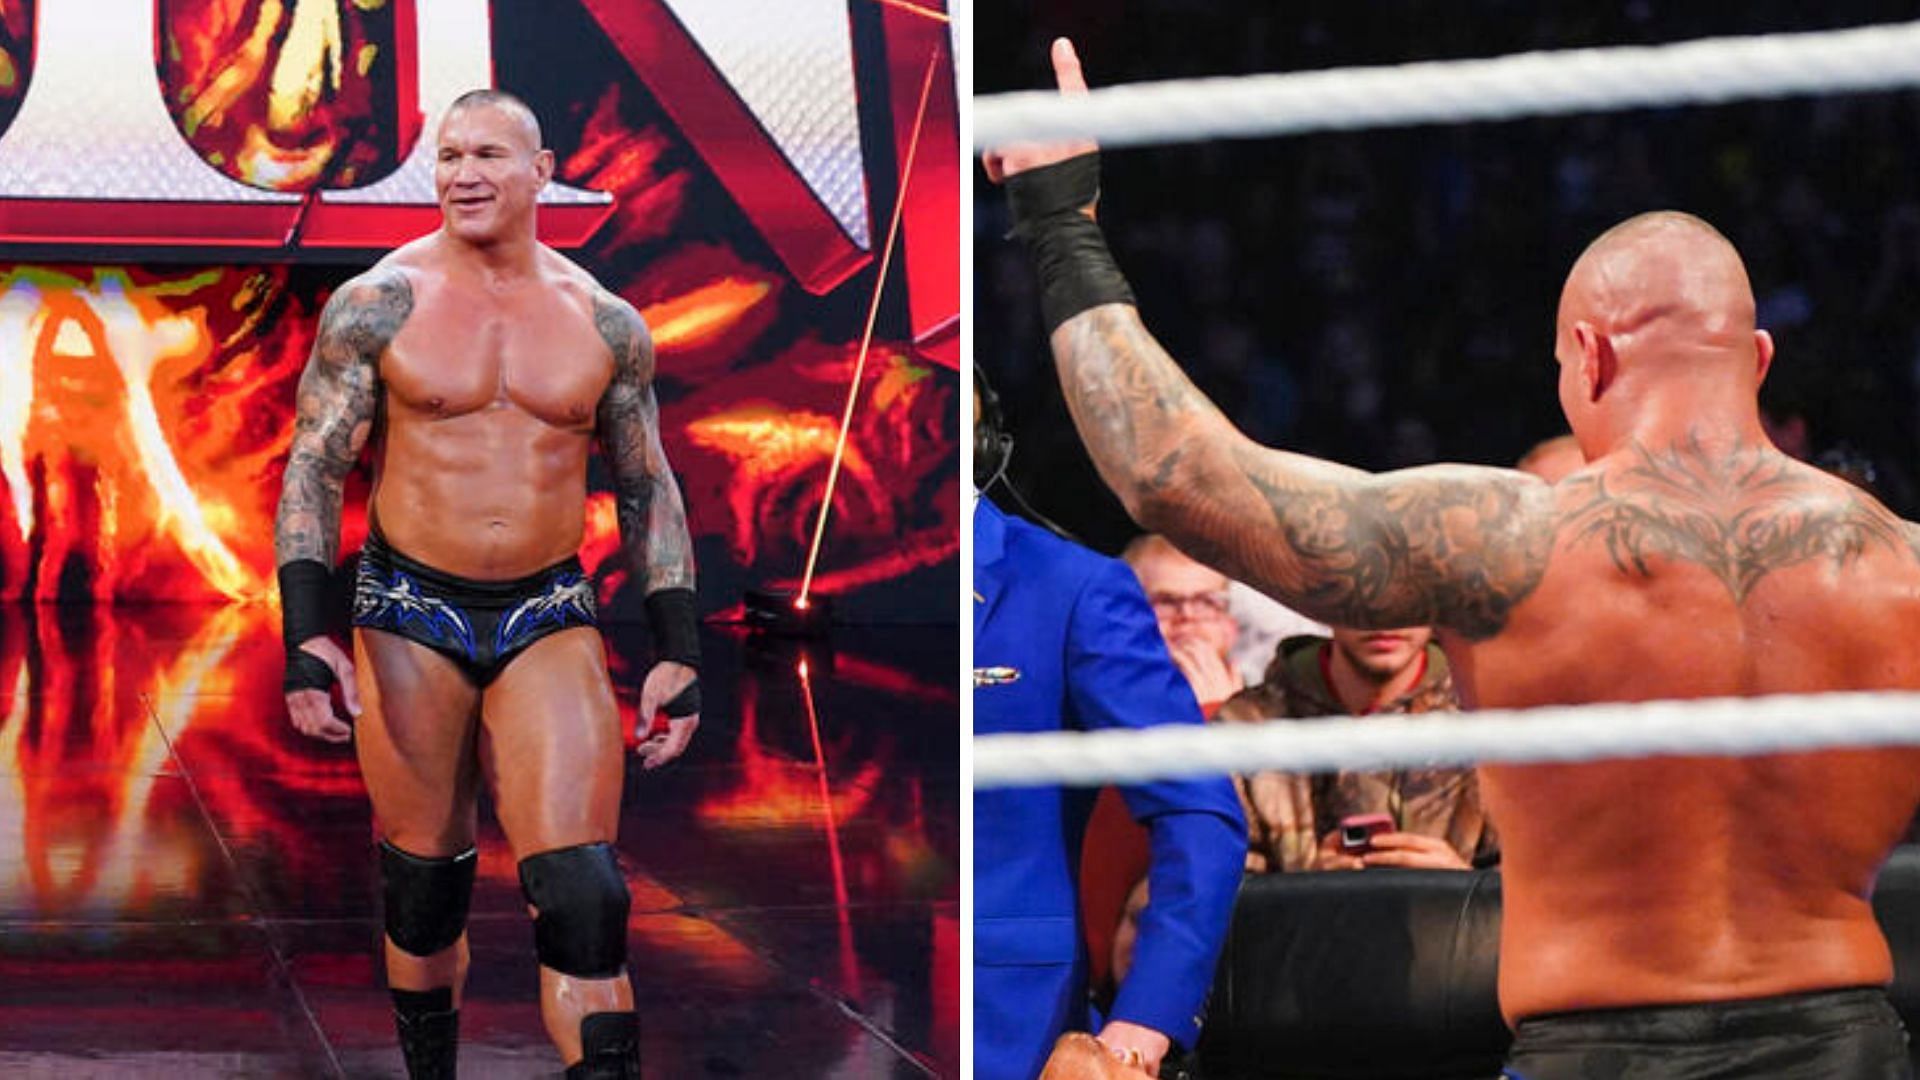 Randy Orton is a 20-time WWE champion [Image credits: wwe.com]